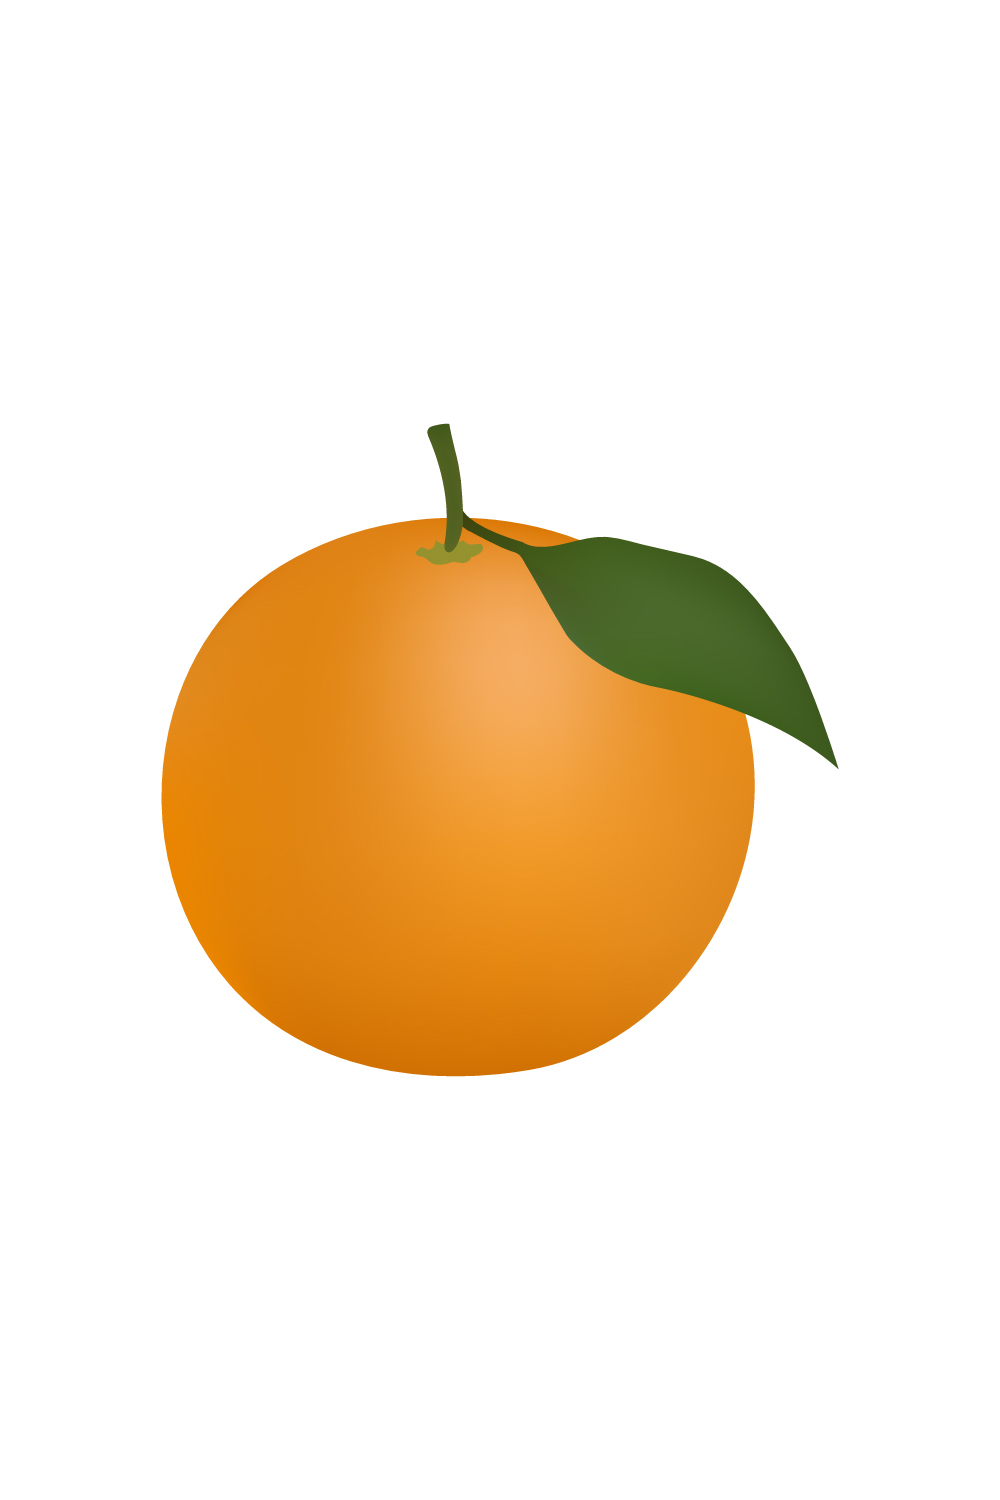 Orange Illustration On White Background pinterest preview image.